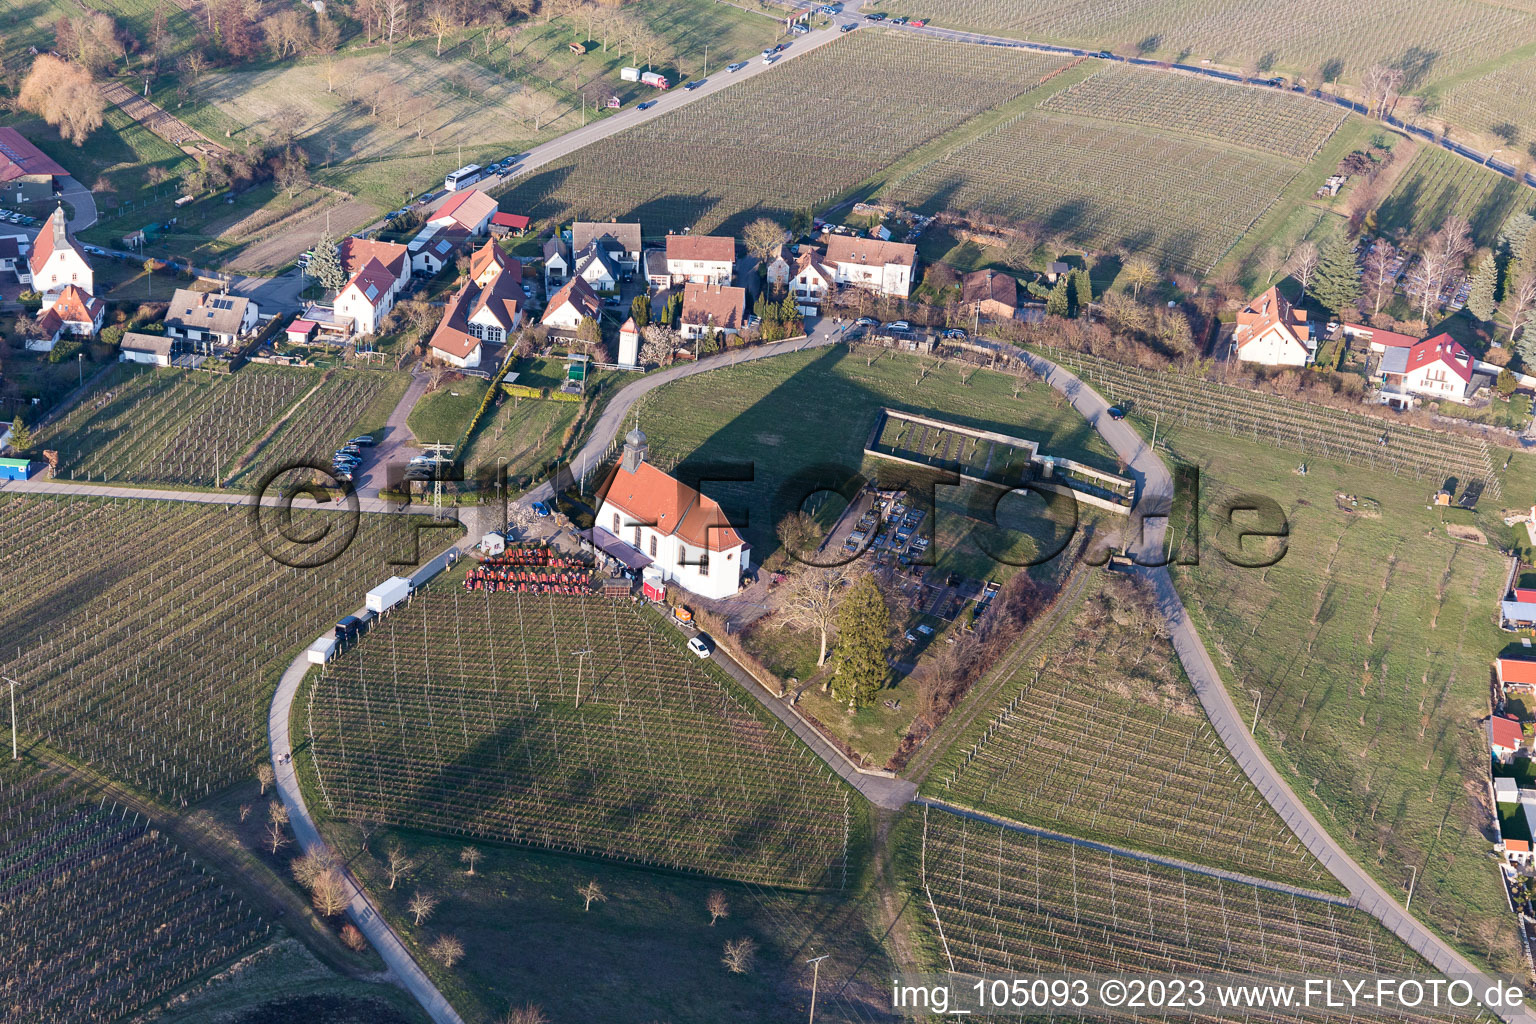 Drone image of District Gleiszellen in Gleiszellen-Gleishorbach in the state Rhineland-Palatinate, Germany